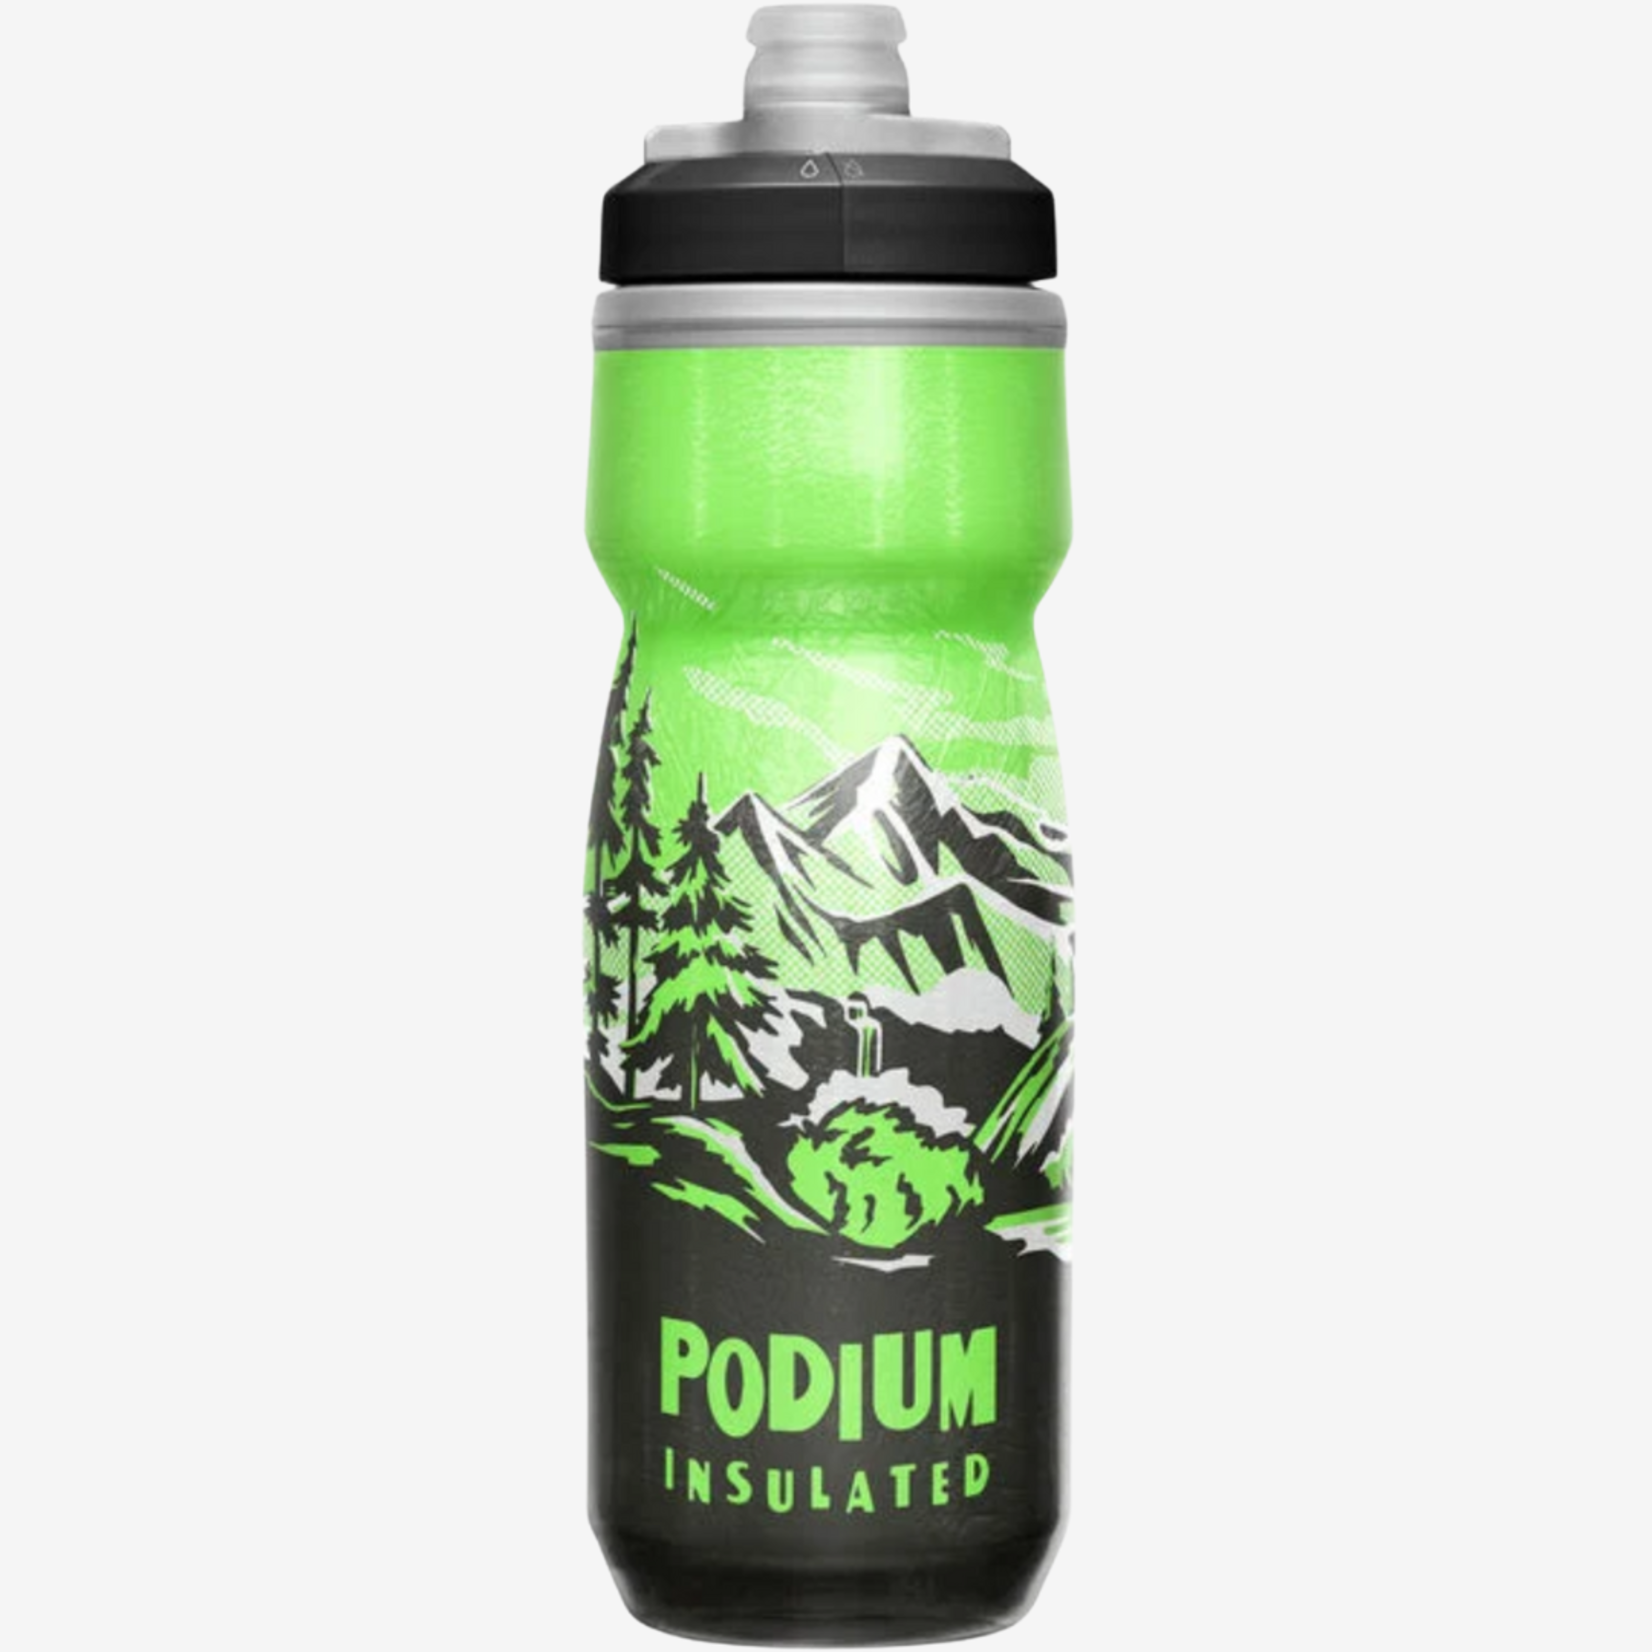 Camelbak Podium Chill 620ml Dirt Series Water Bottle